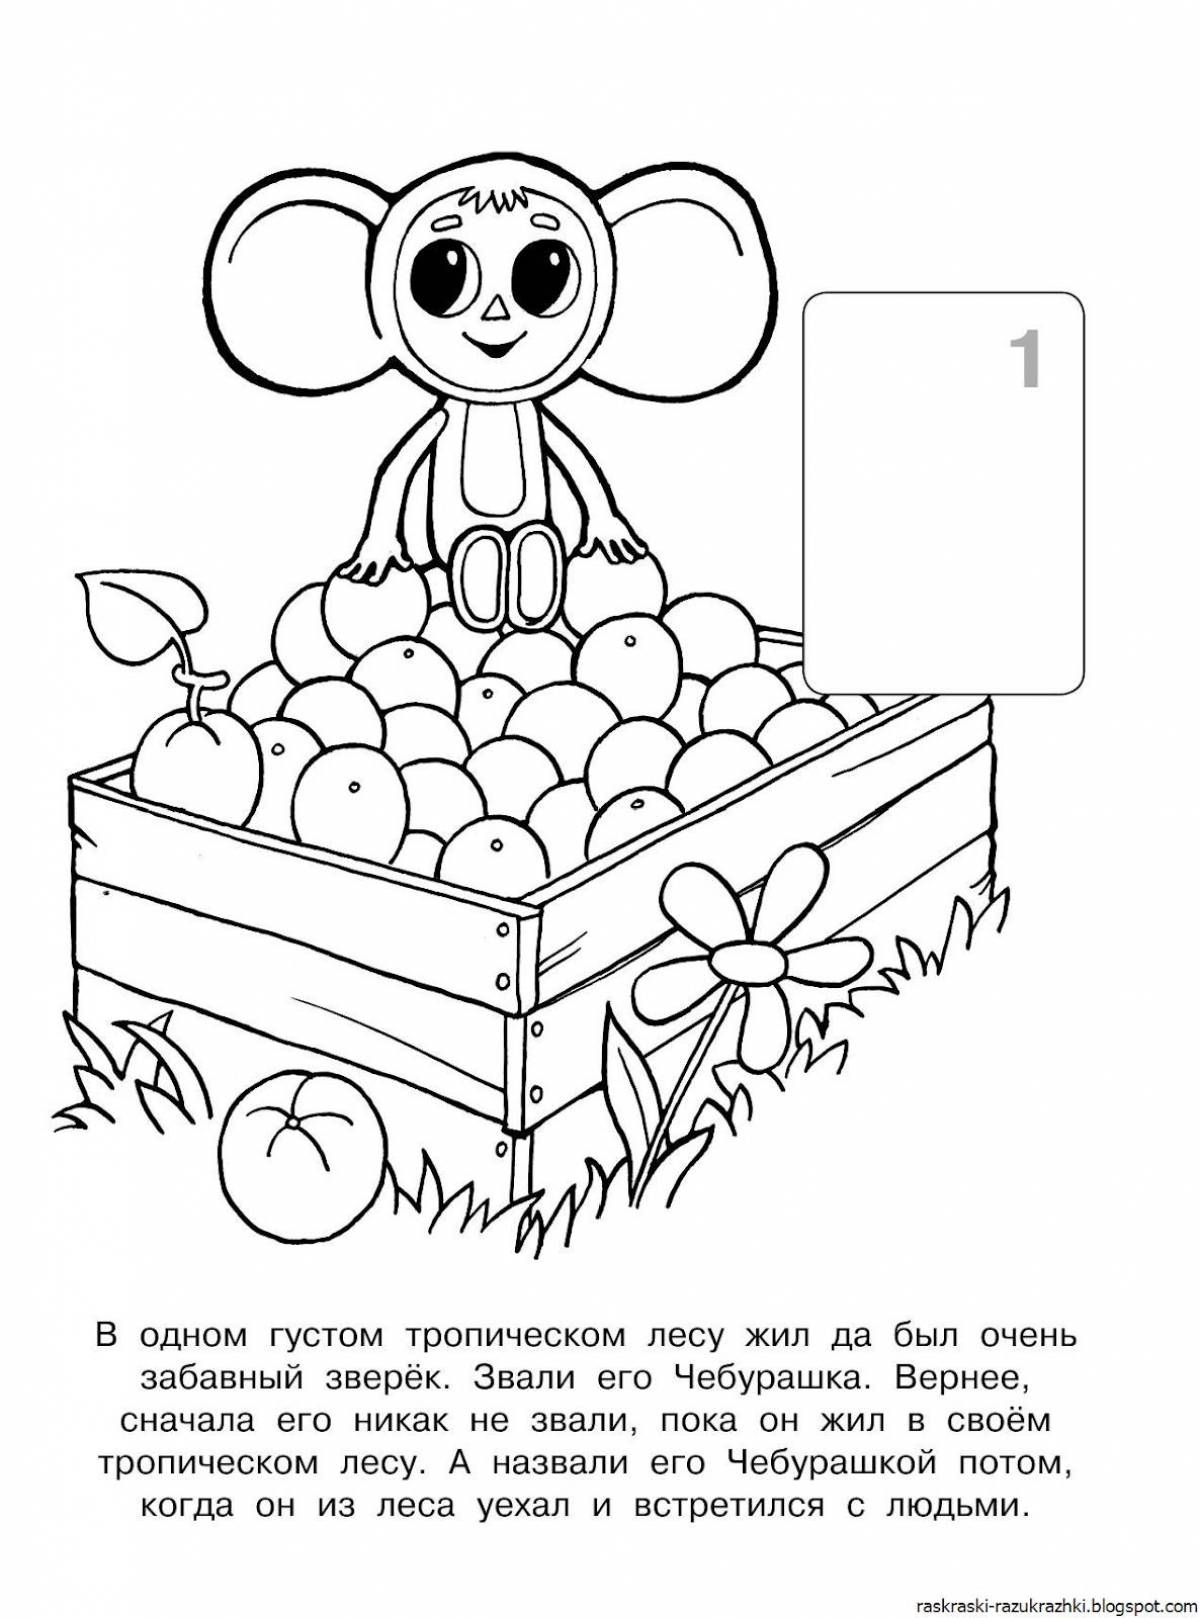 Coloring page charming cheburashka and gene